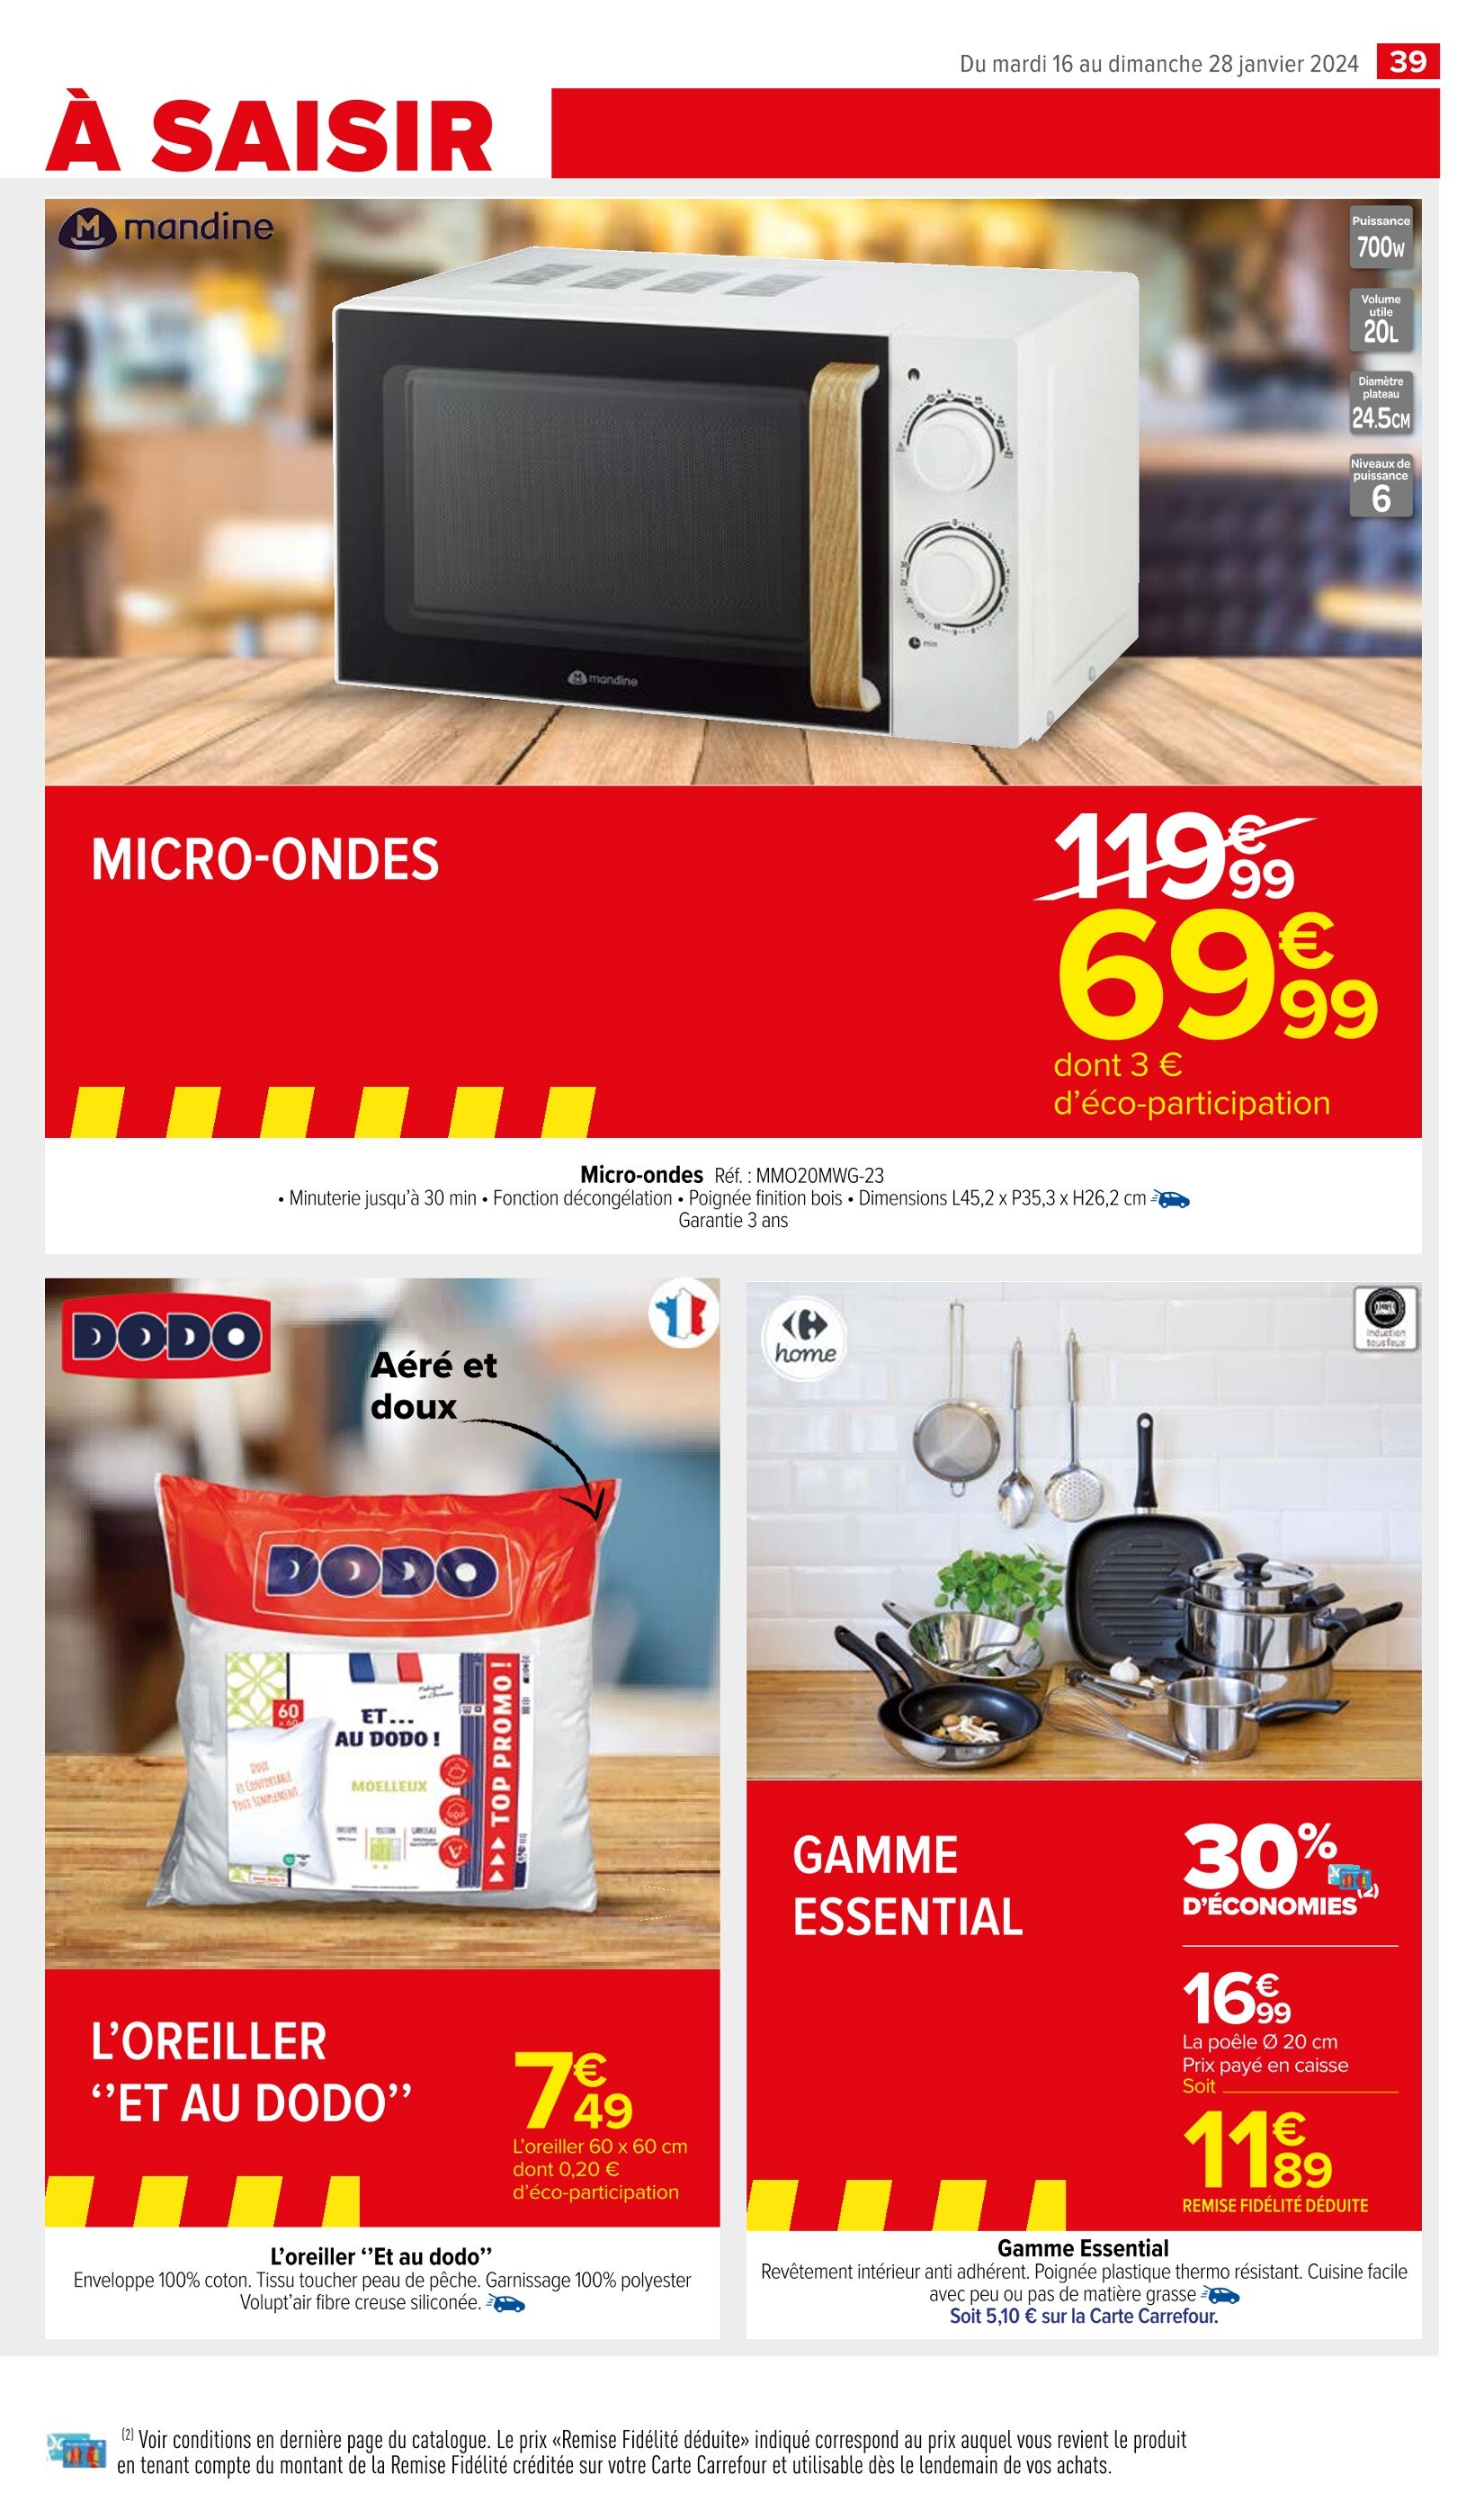 Promo Micro-ondes grill qilive q.6989 chez Auchan